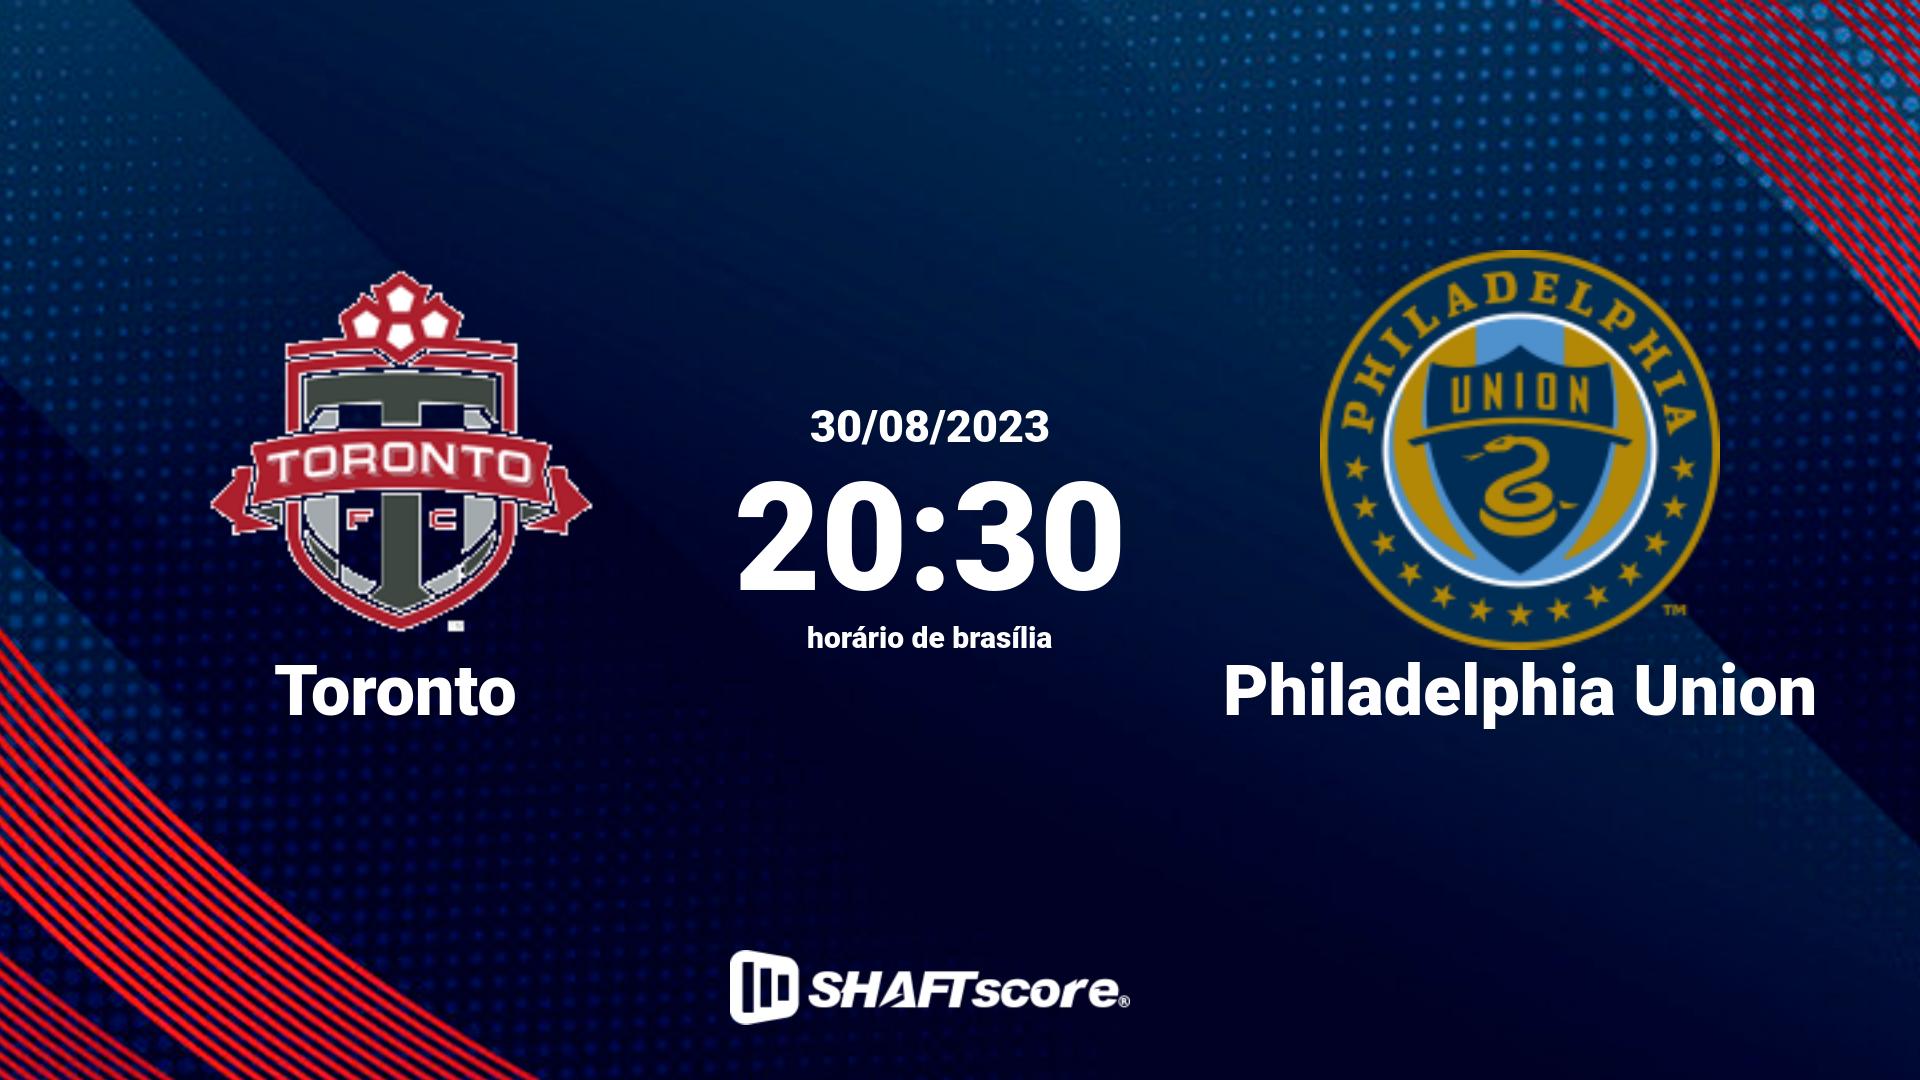 Estatísticas do jogo Toronto vs Philadelphia Union 30.08 20:30